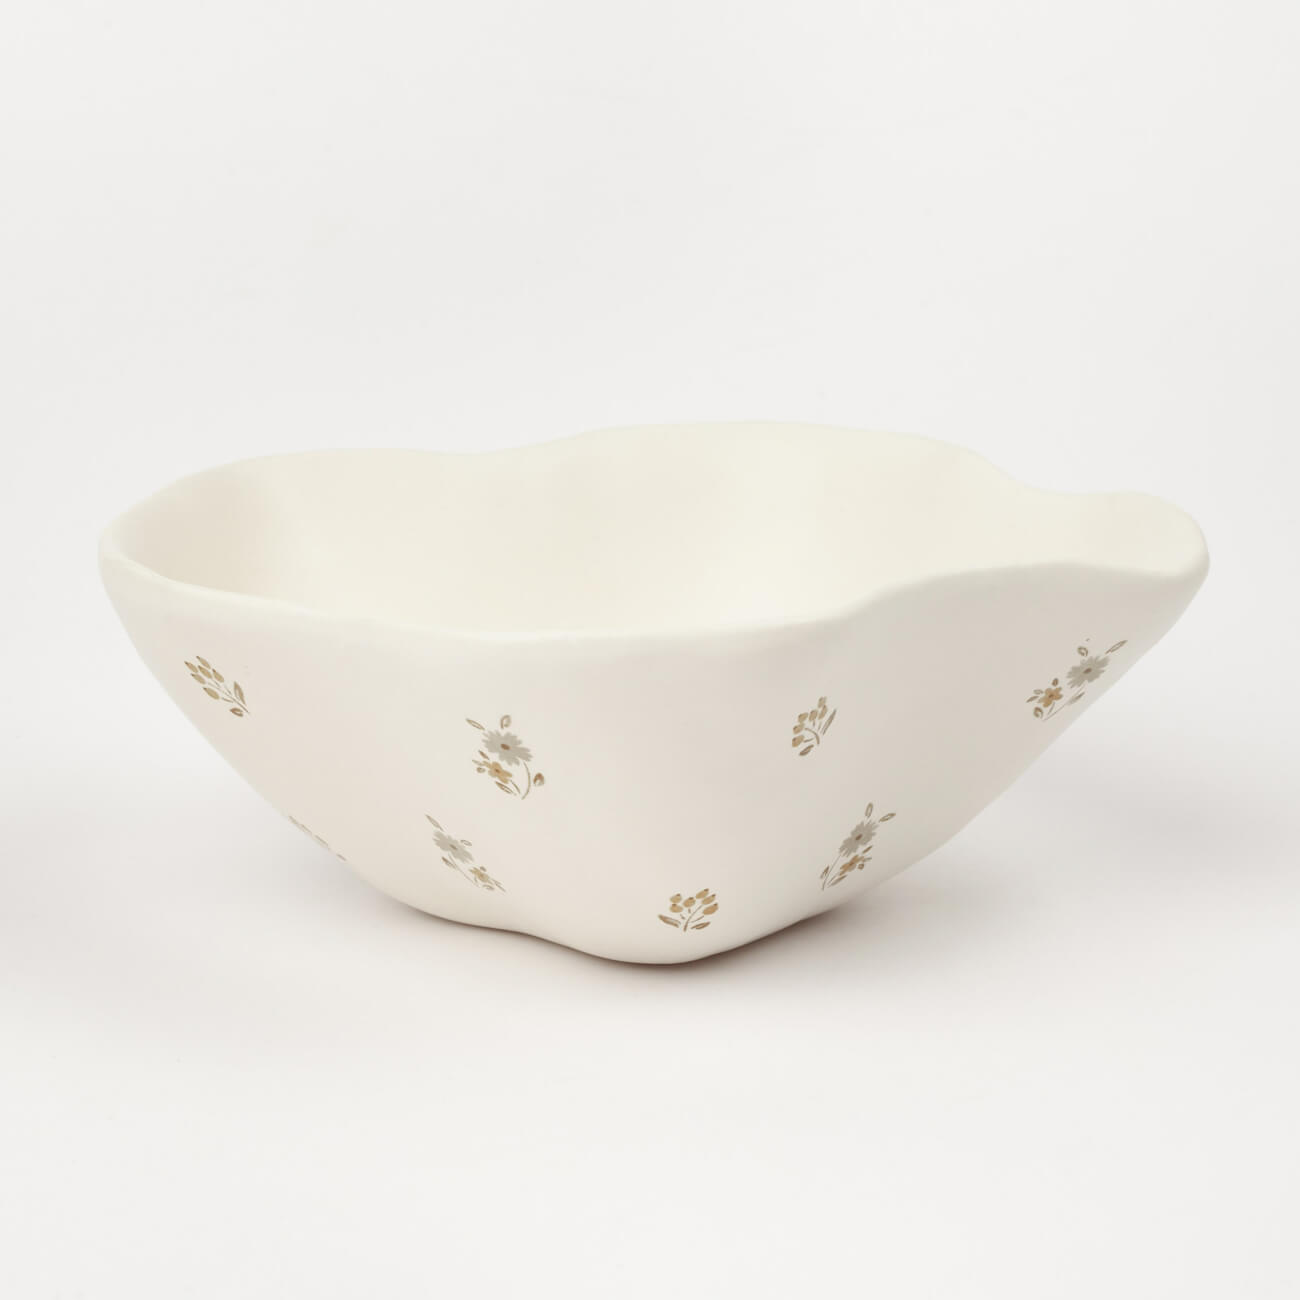 Пиала, 13х5 см, керамика, молочная, Винтажные цветы, La flore ferplast thea small bowl миска для животных керамика